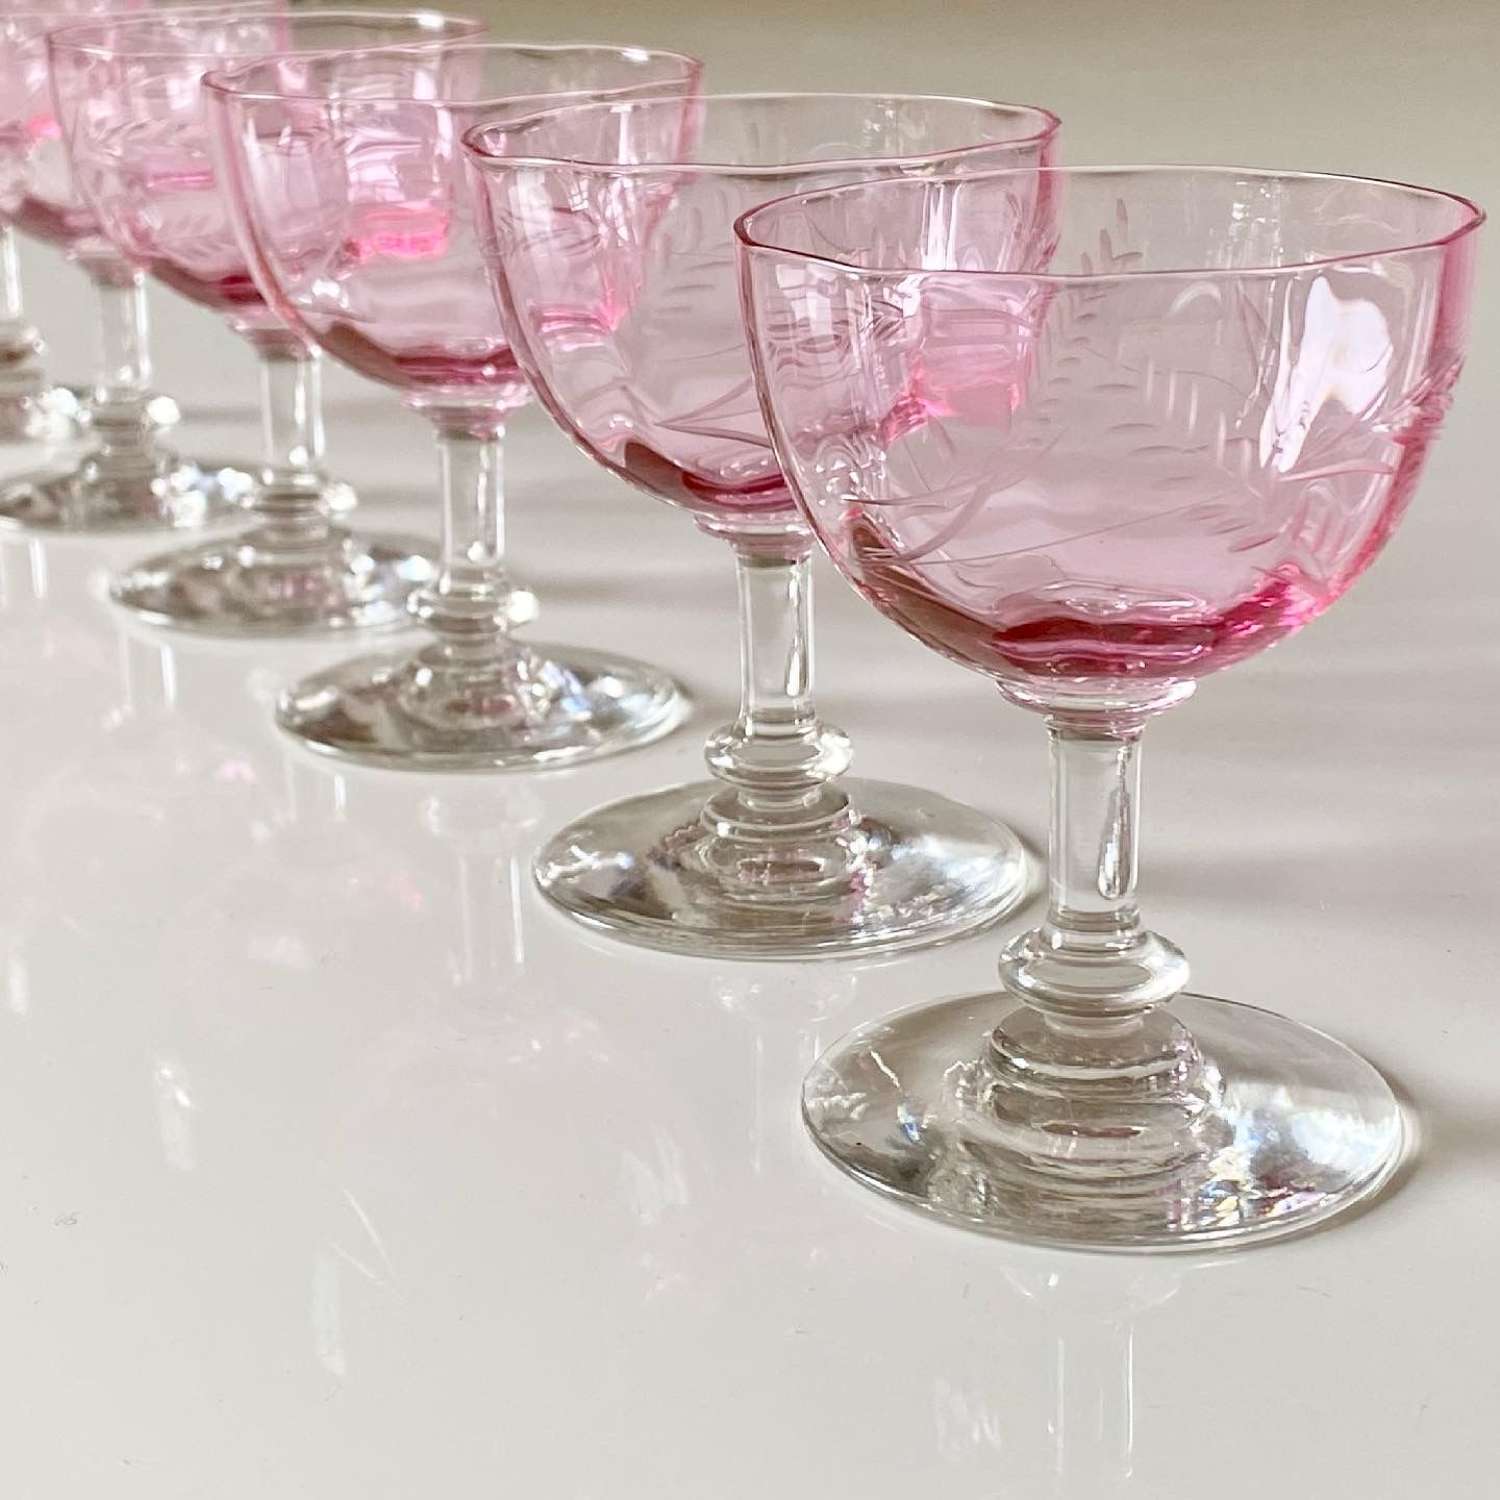 Six pink Baccarat crystal dessert wine glasses